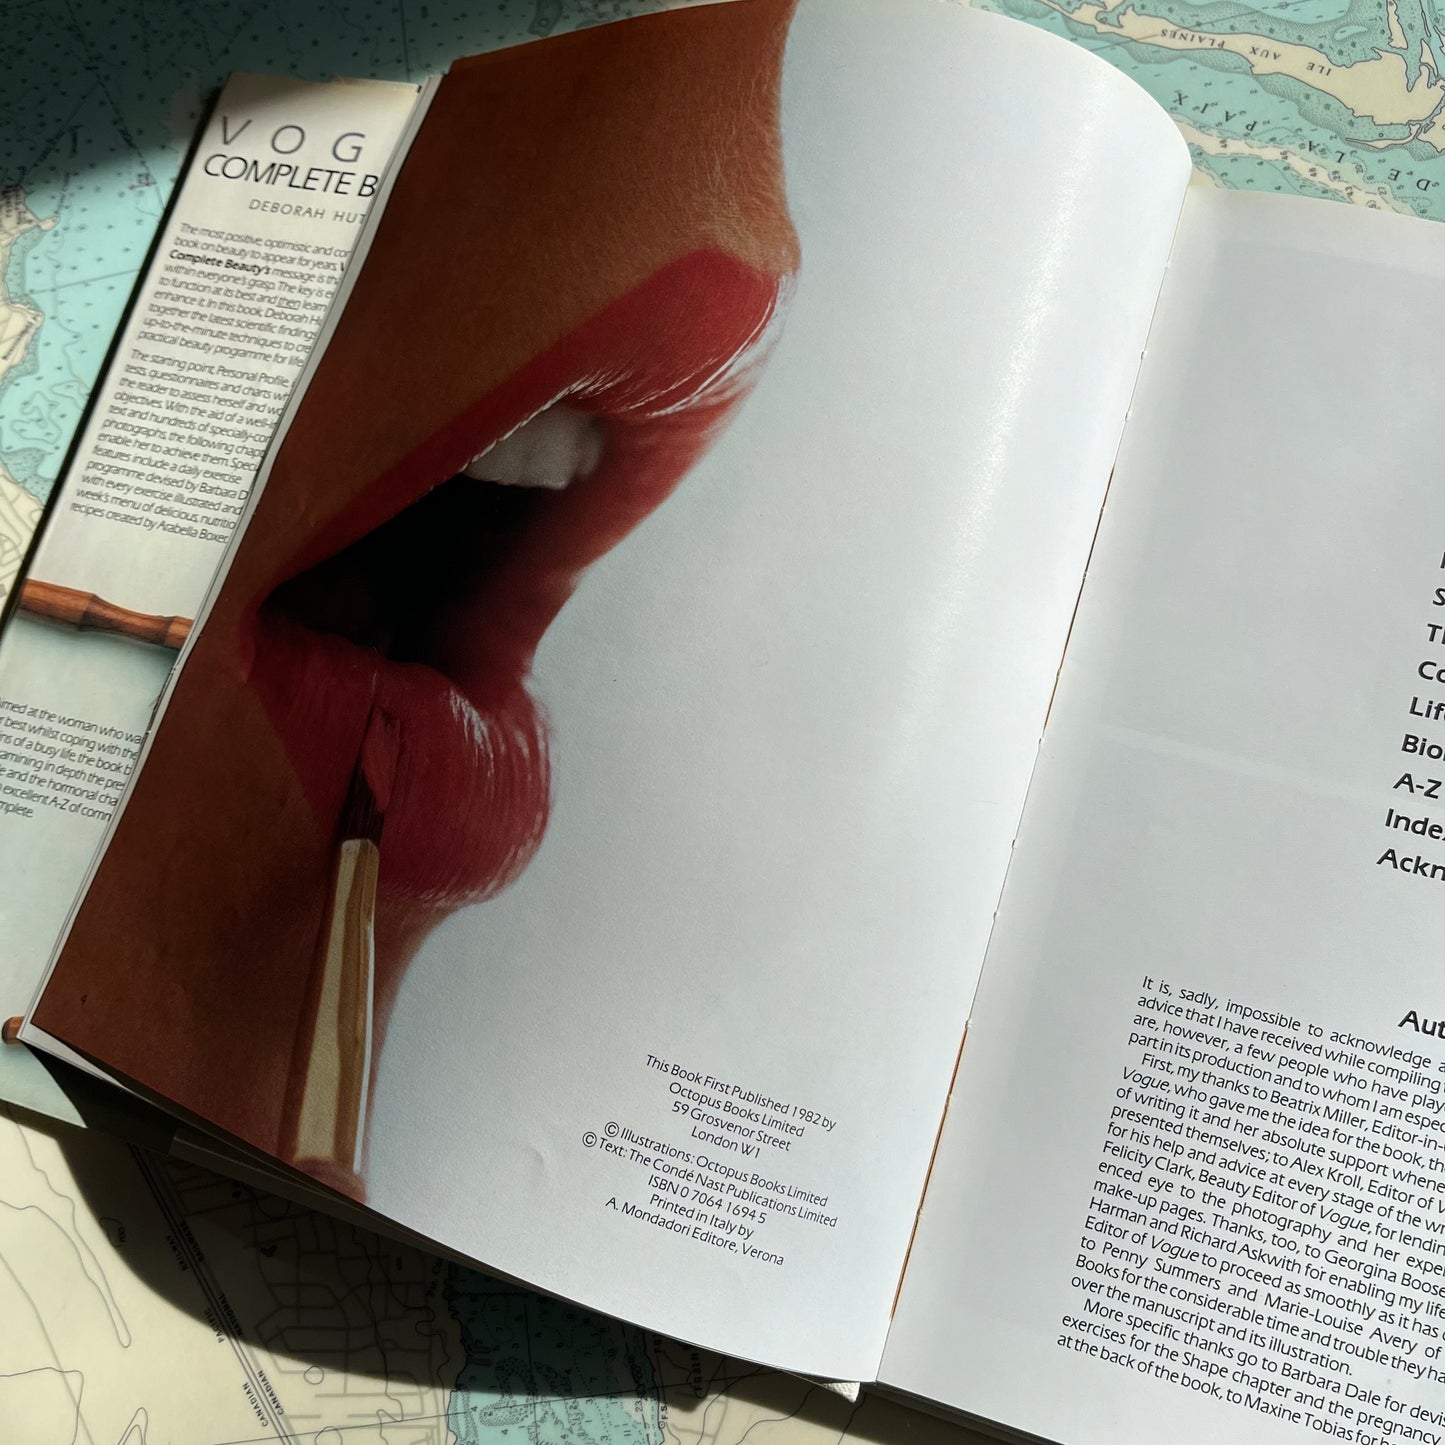 Vintage 1982 Vogue Complete Beauty Hardcover Book